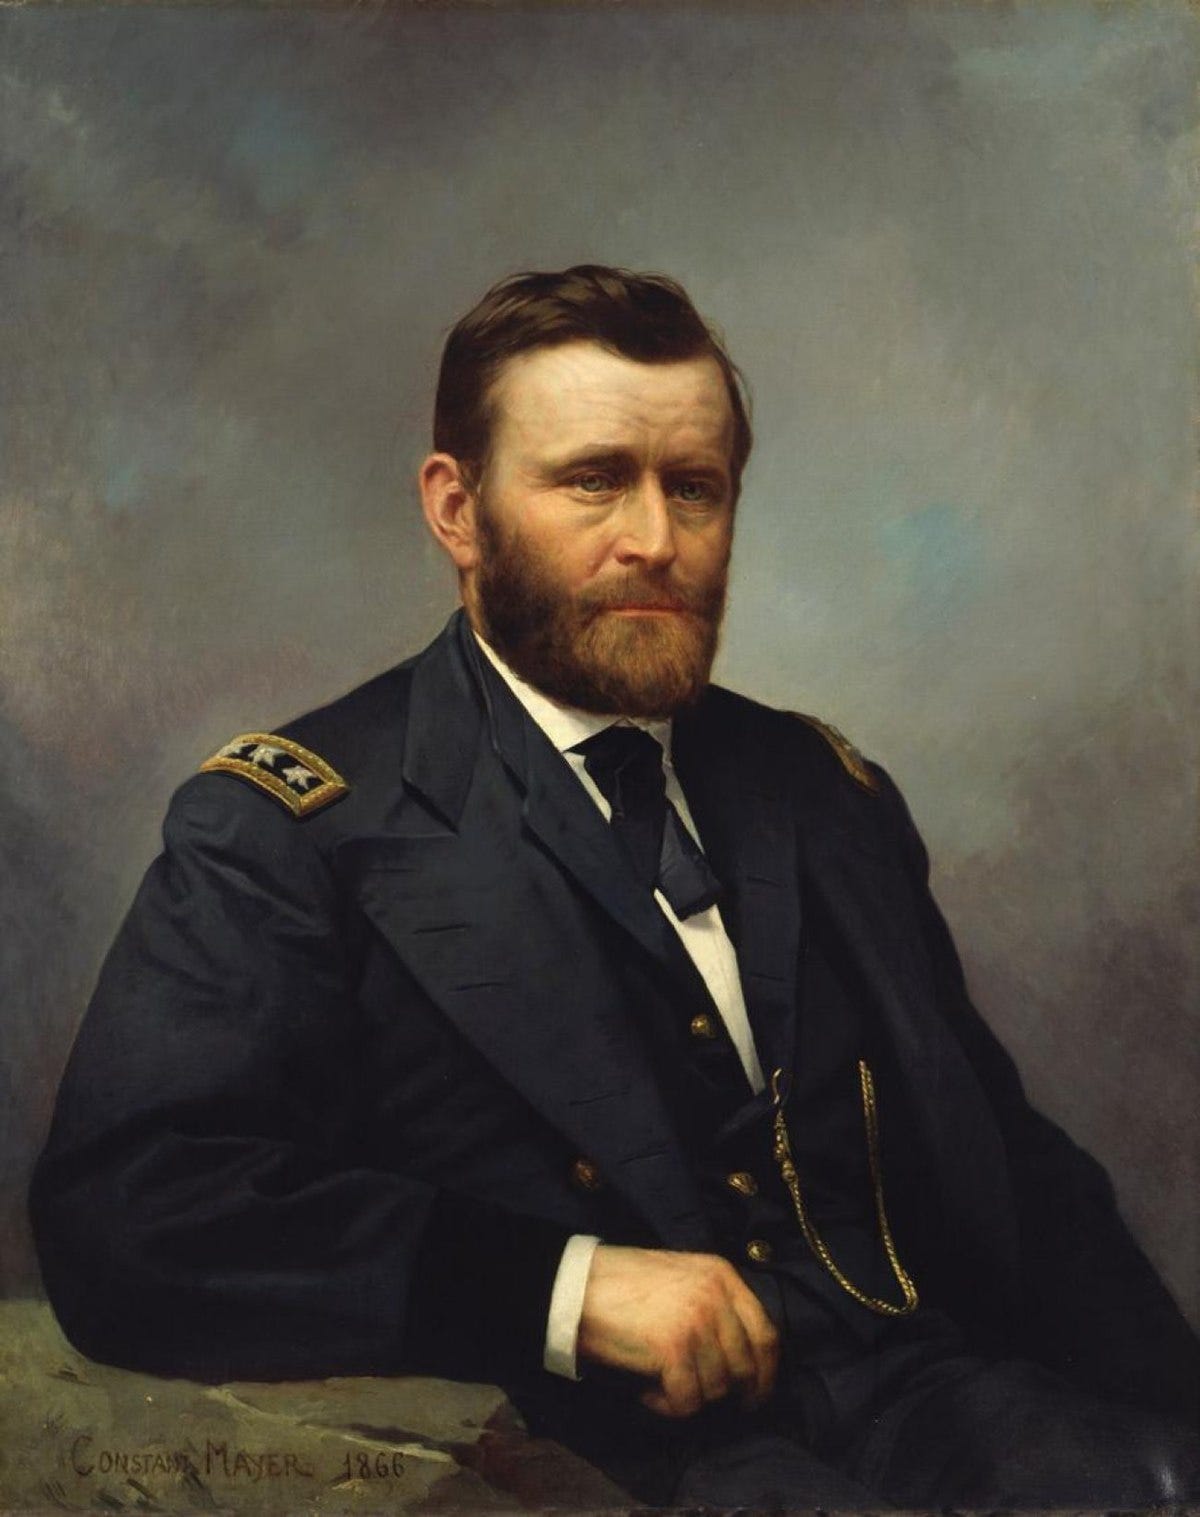 Historical reputation of Ulysses S. Grant - Wikipedia